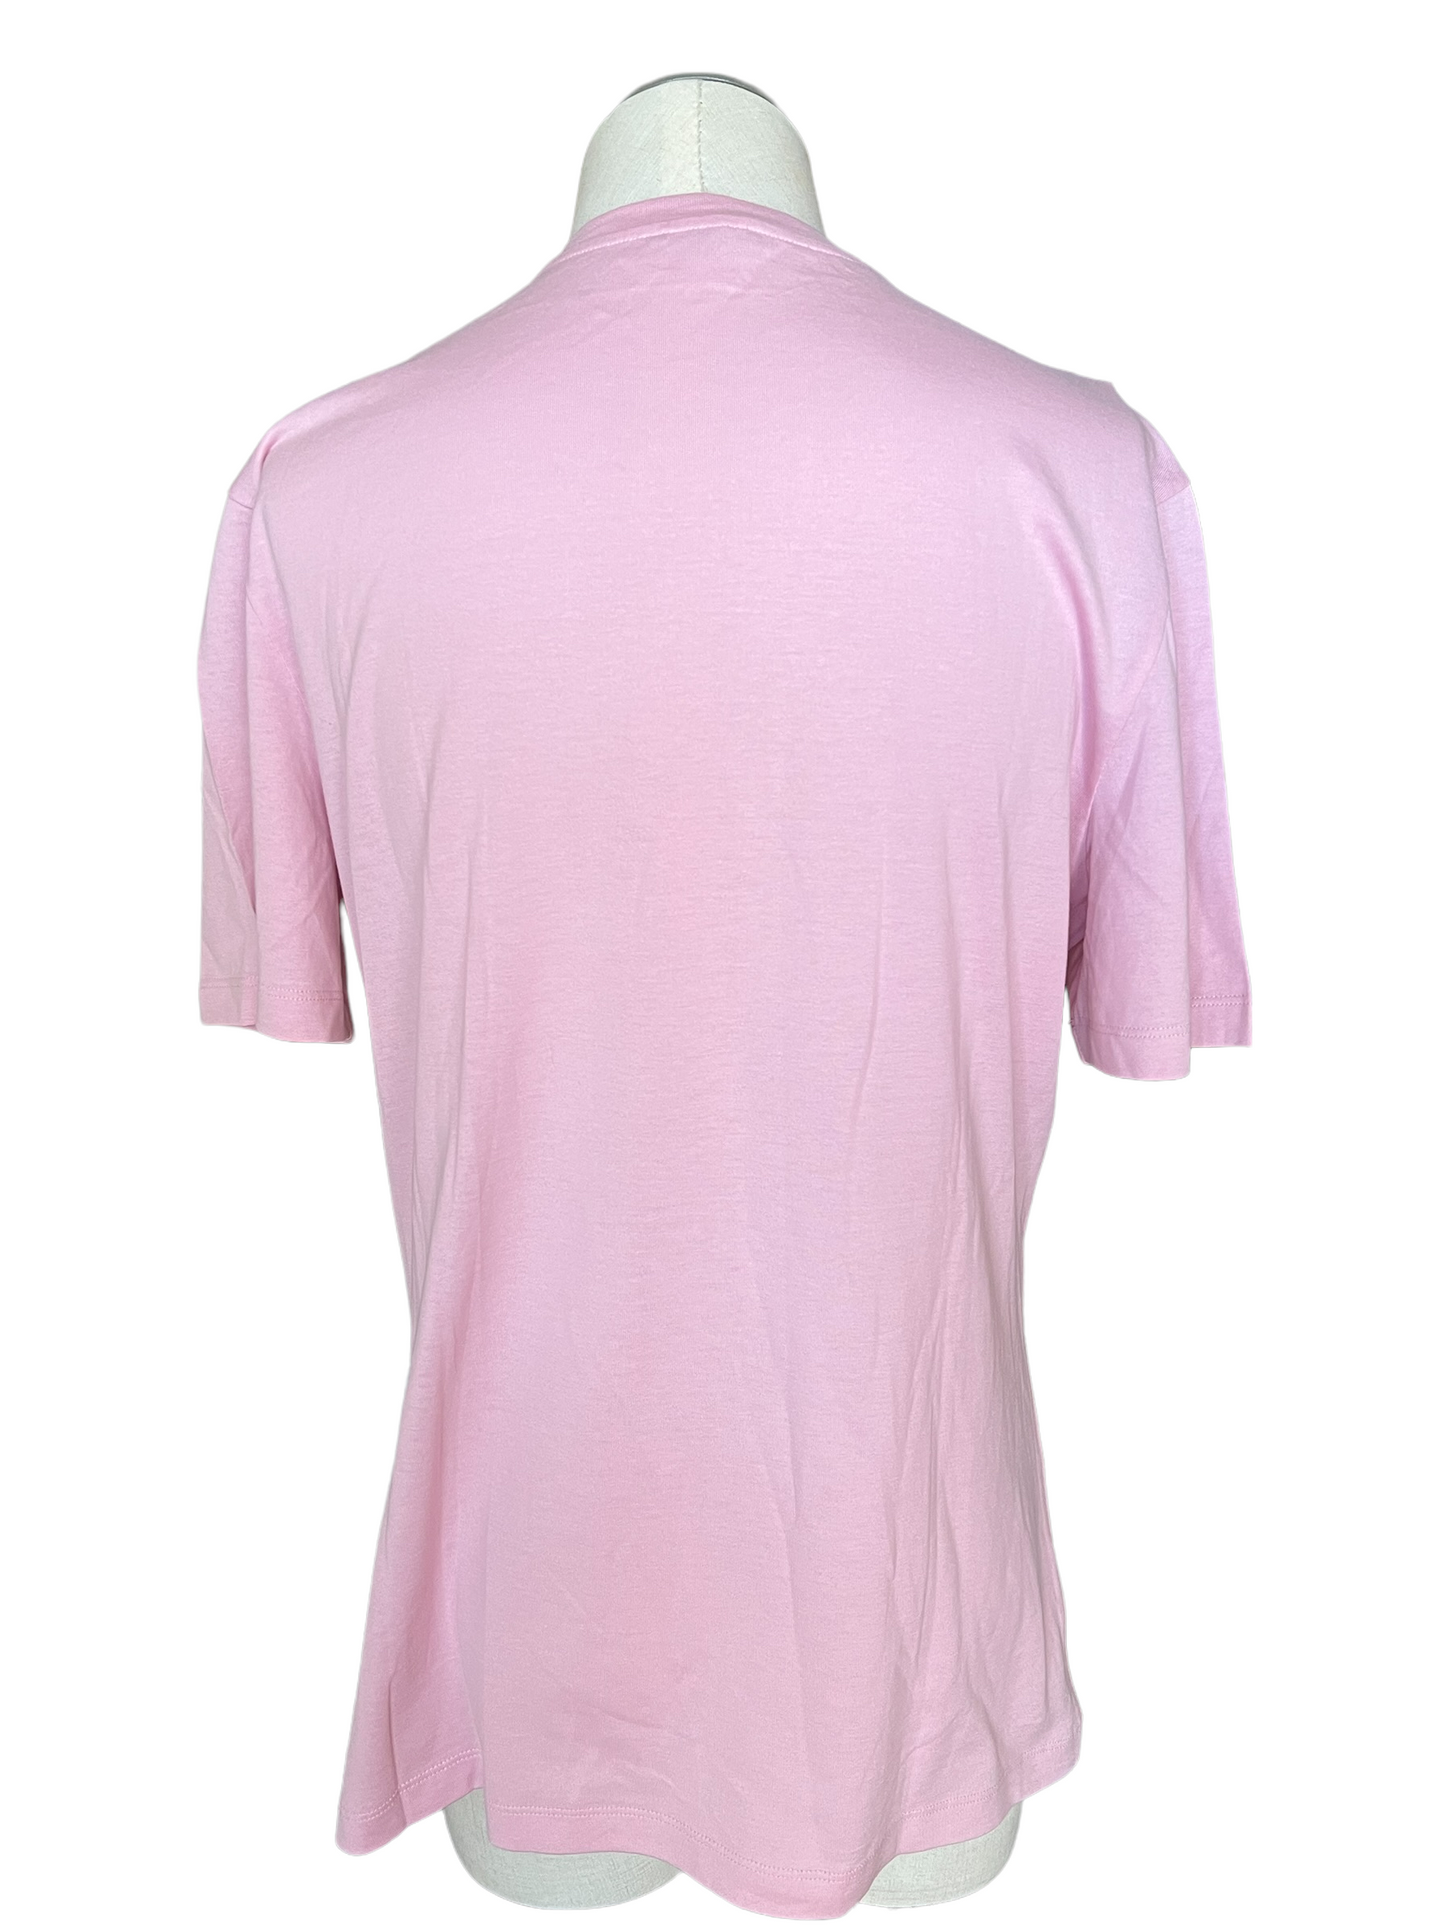 Versace Pink Baroque Logo Size 38 T-Shirt